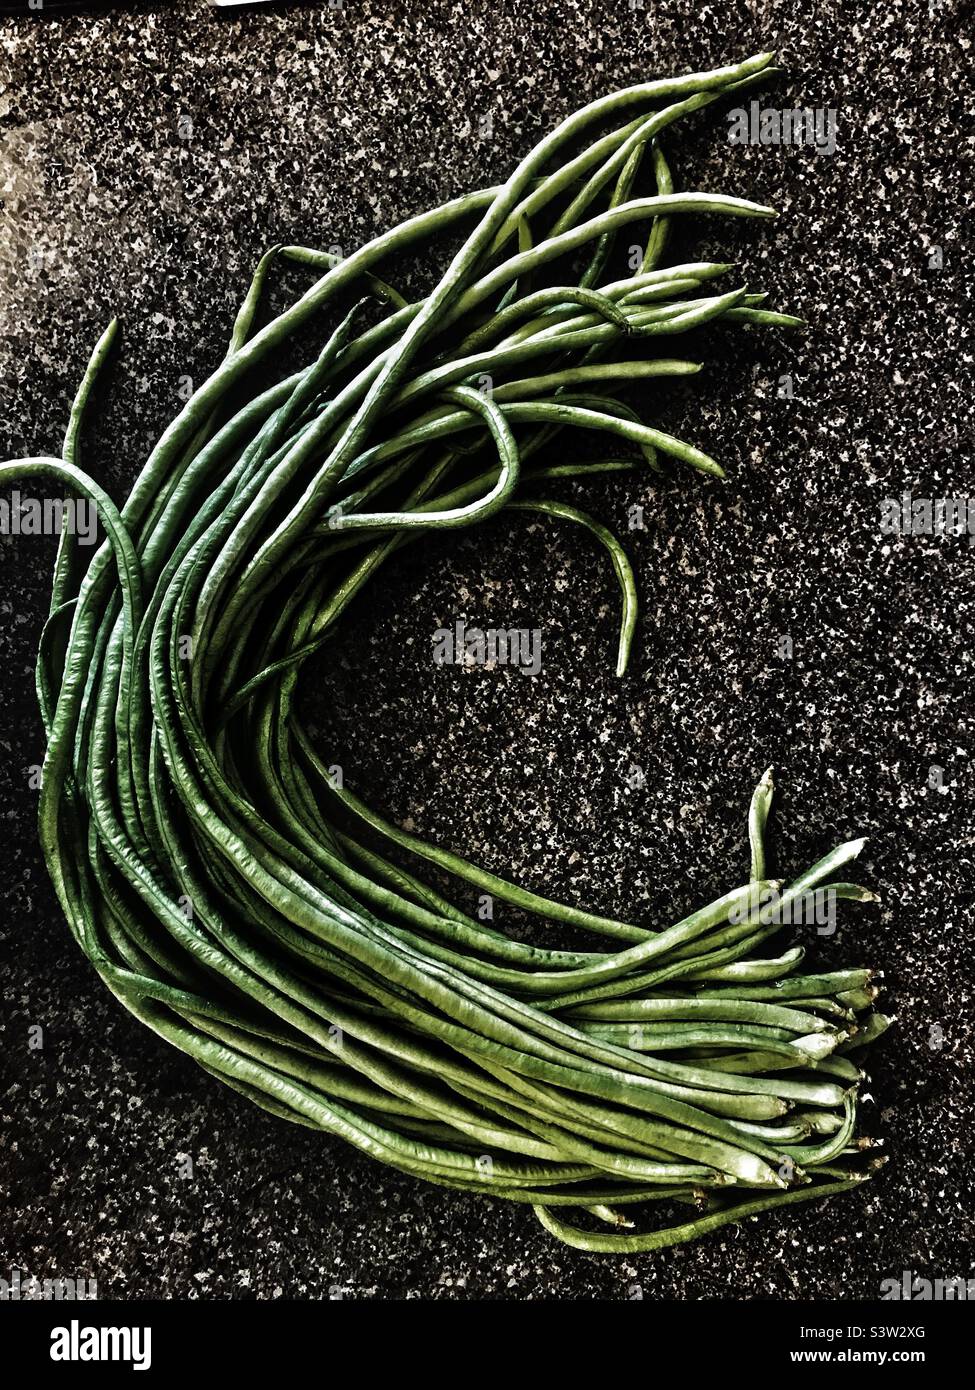 Long green beans Stock Photo